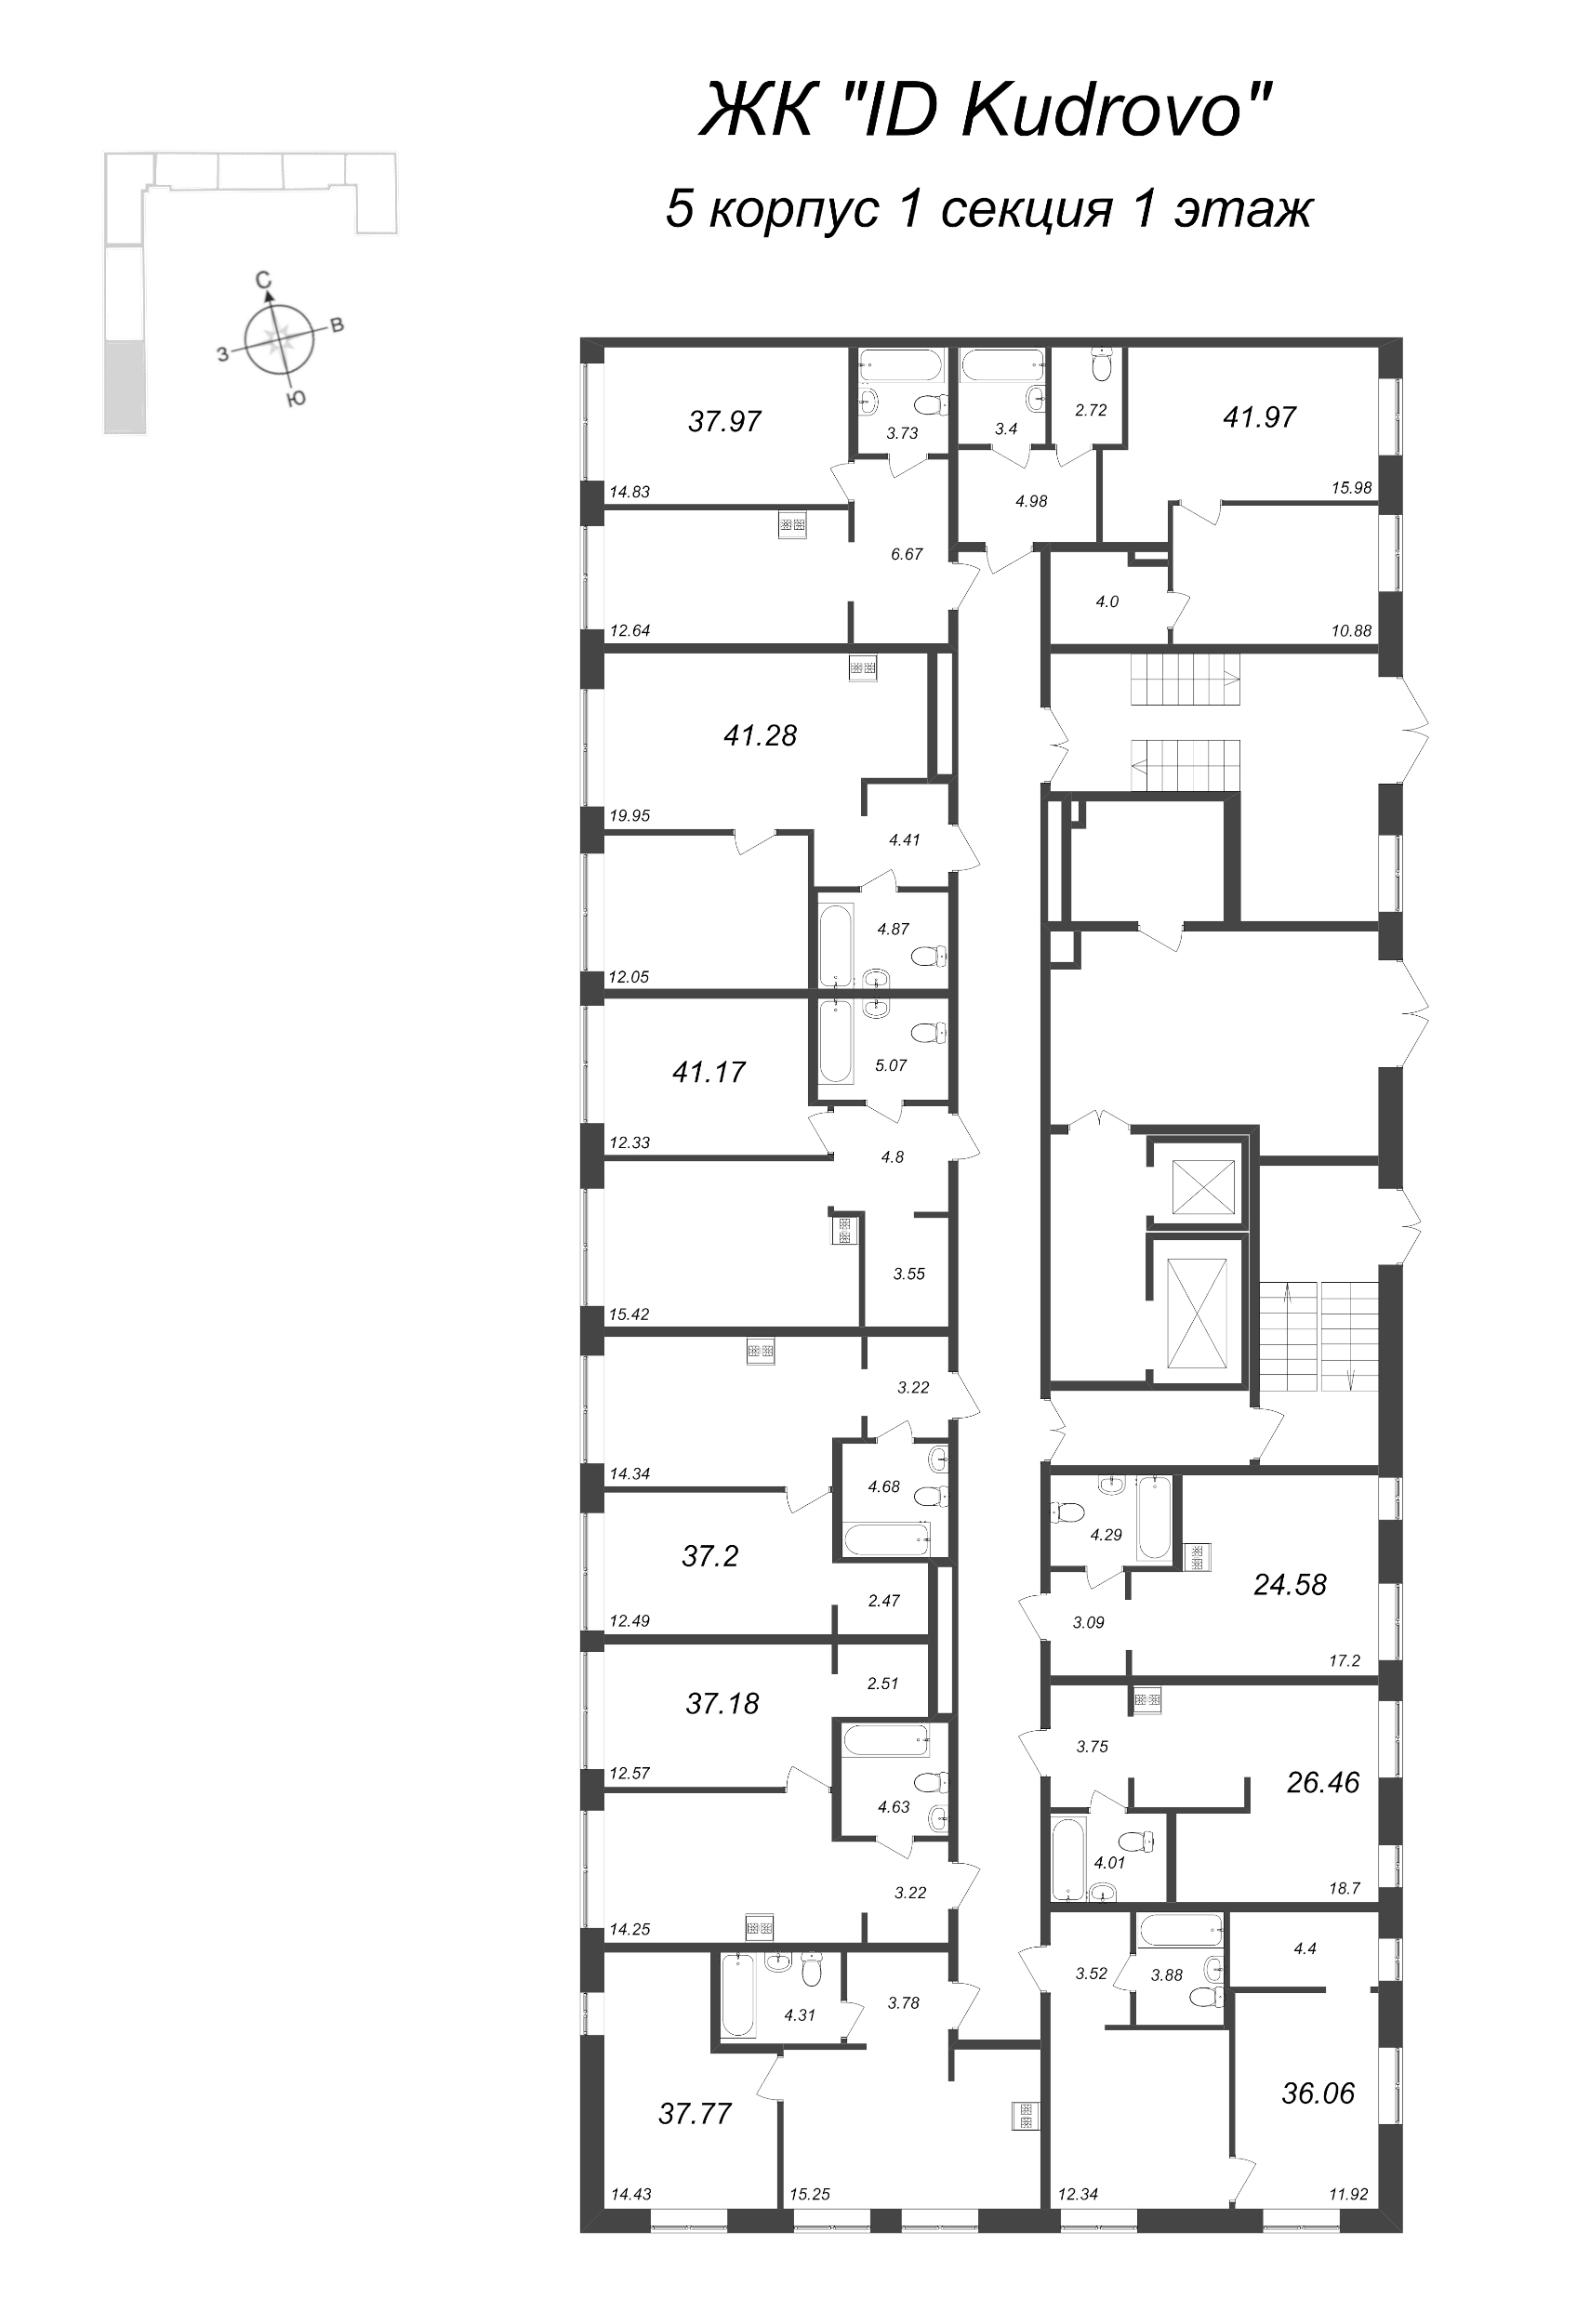 2-комнатная (Евро) квартира, 41.28 м² - планировка этажа